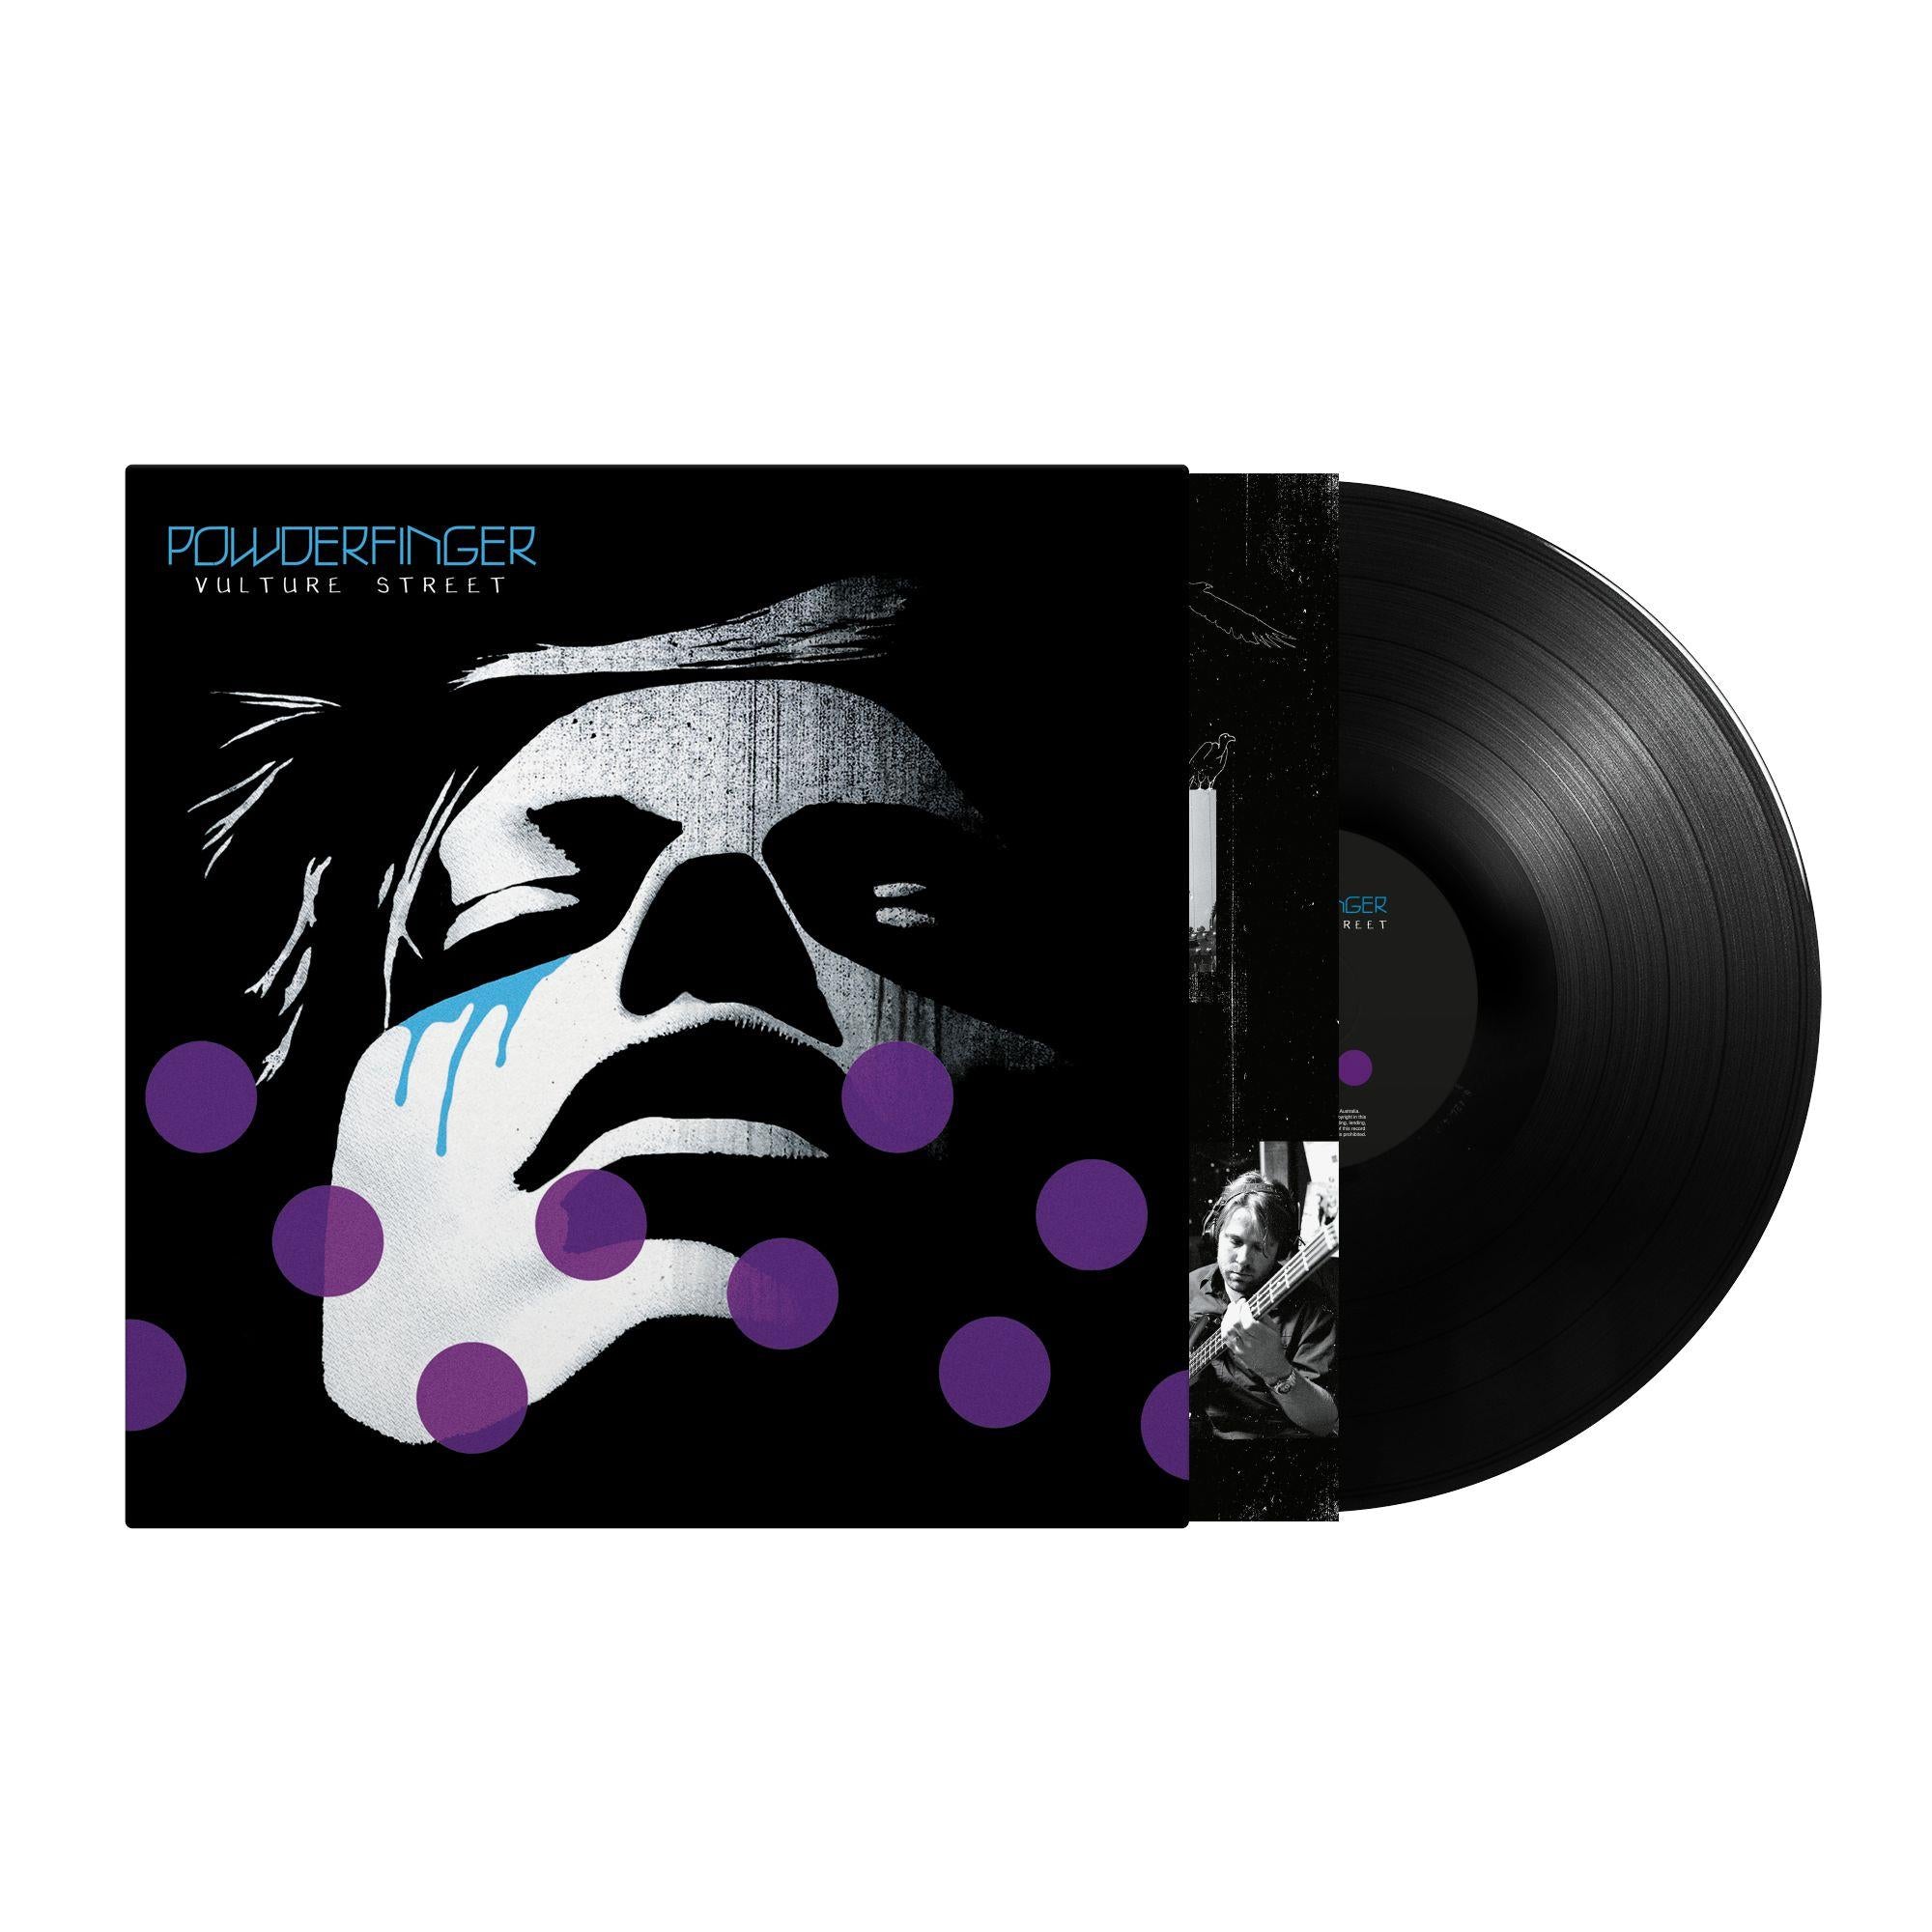 vulture street (20th anniversary edition) (vinyl)